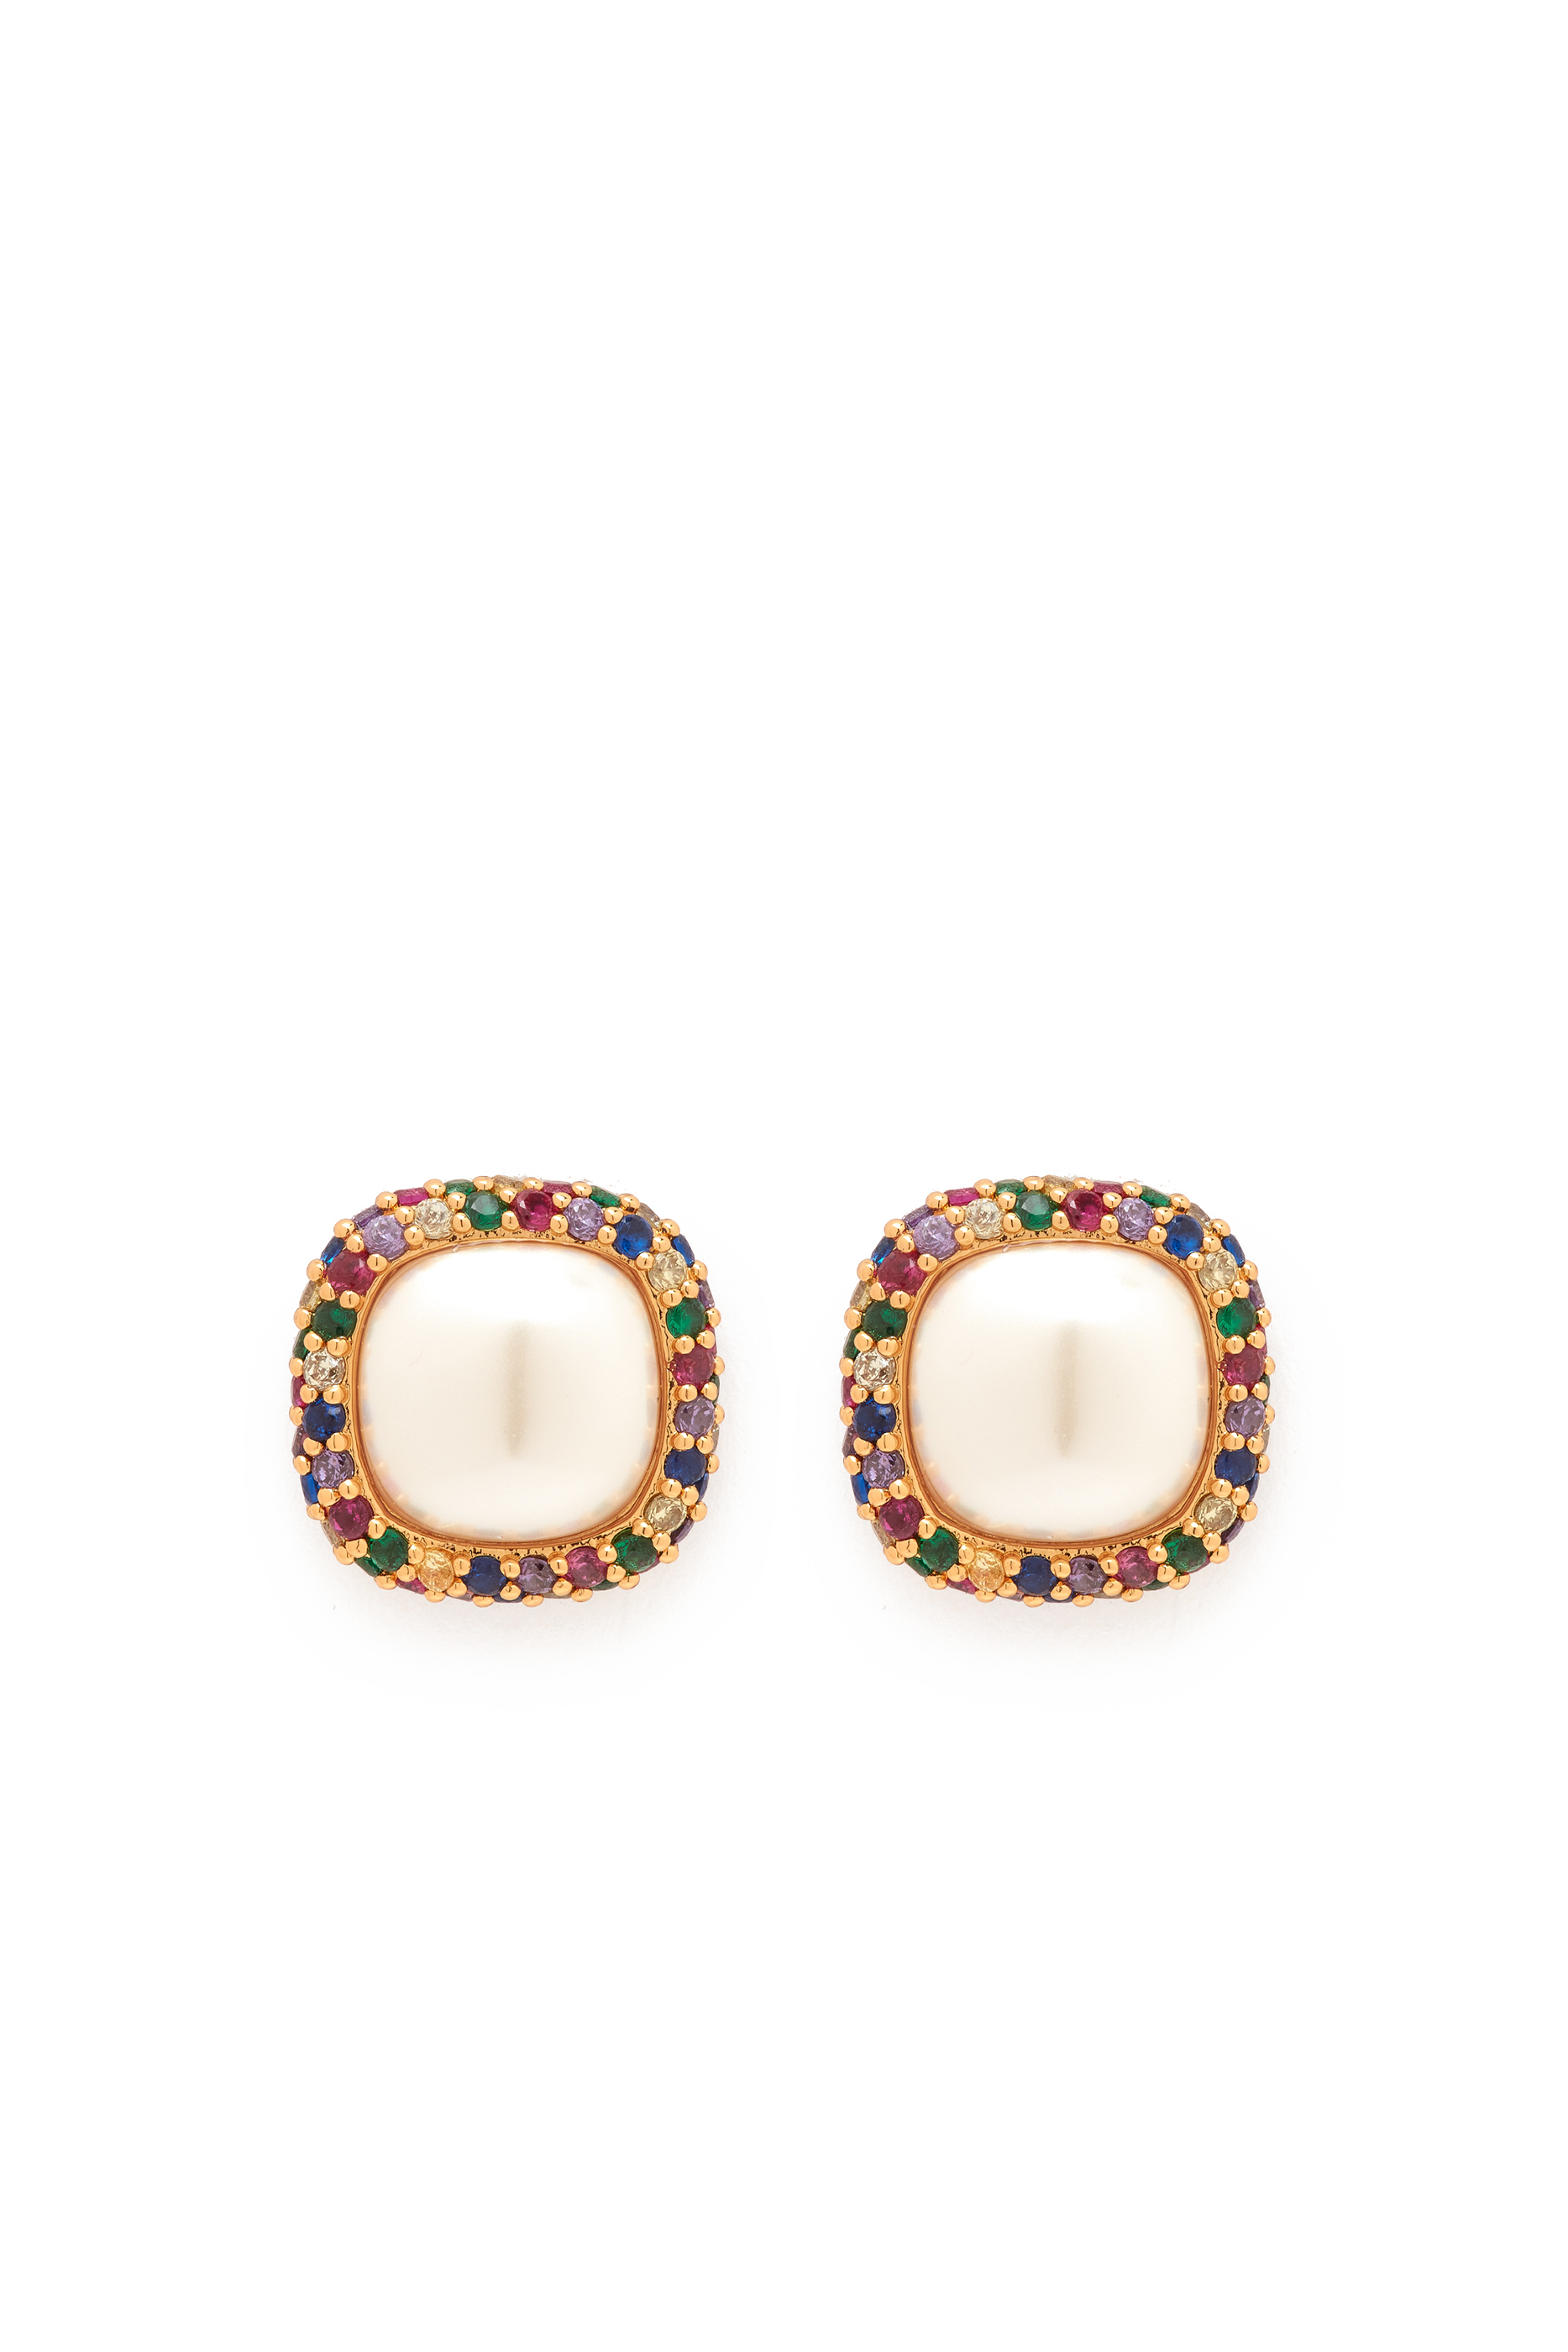 Discover more than 94 bloomingdales pearl earrings super hot